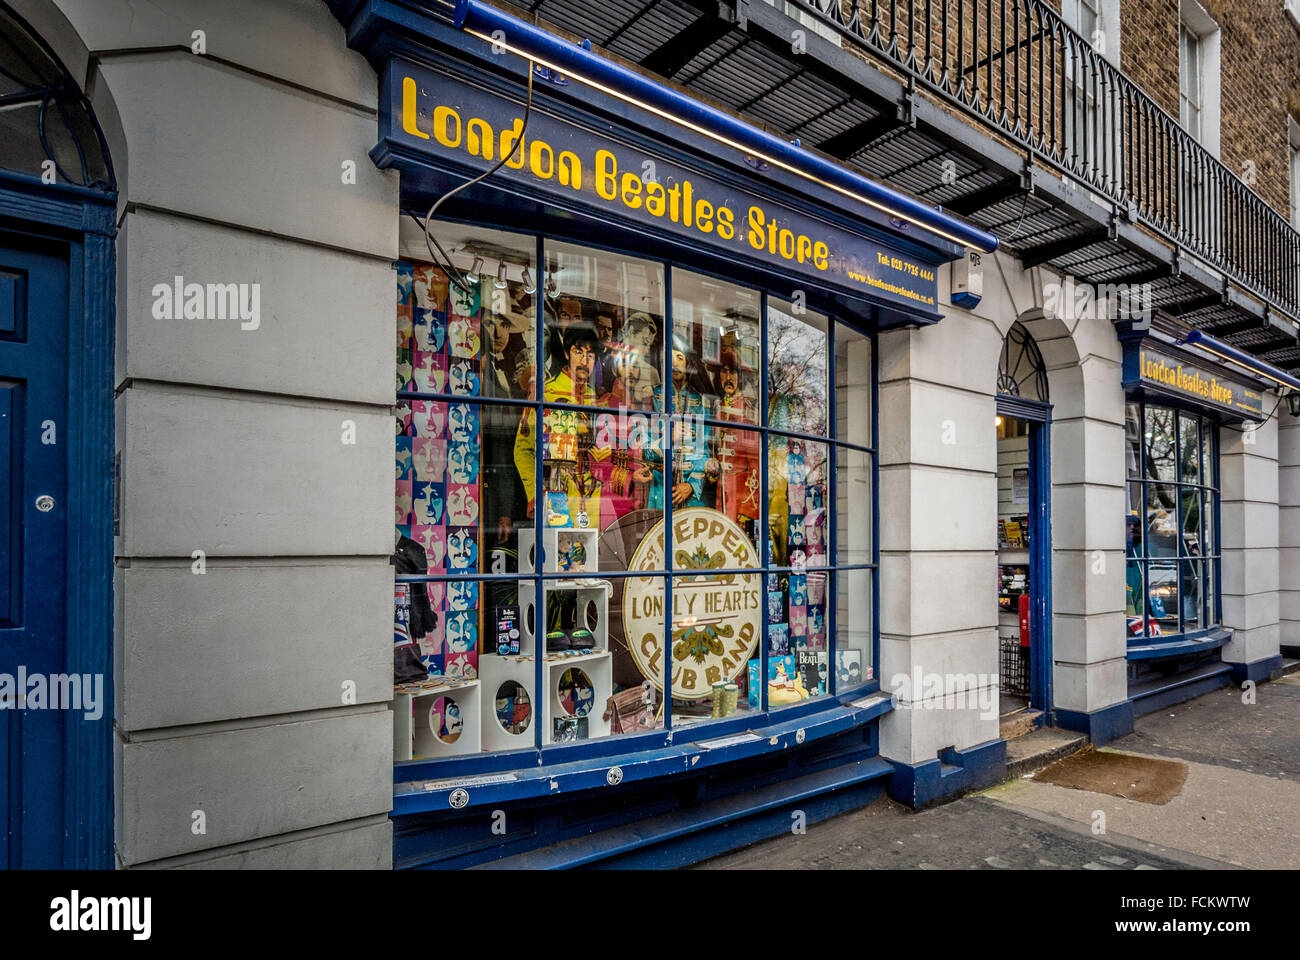 London Beatles Store, London, UK. Stock Photo